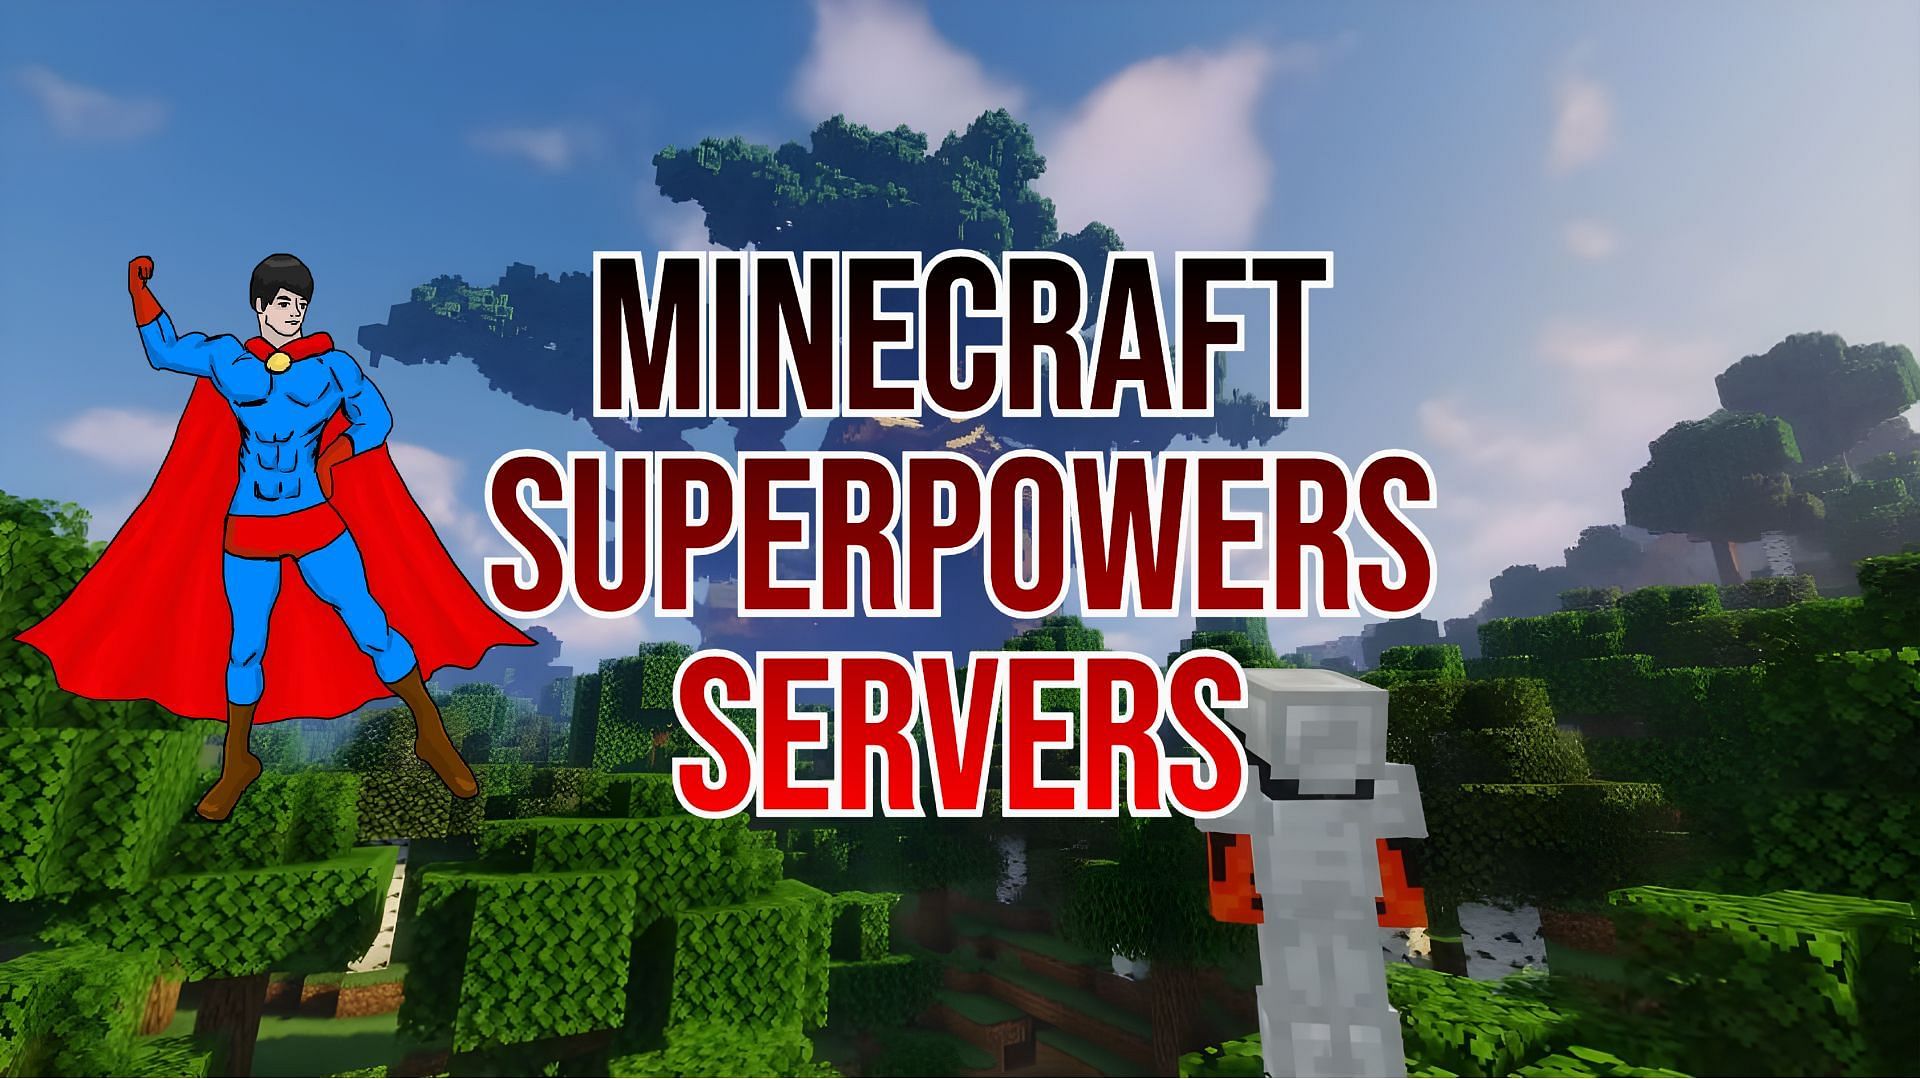 Superpowers make for fun Minecraft gameplay (Image via Mojang/Sportskeeda)